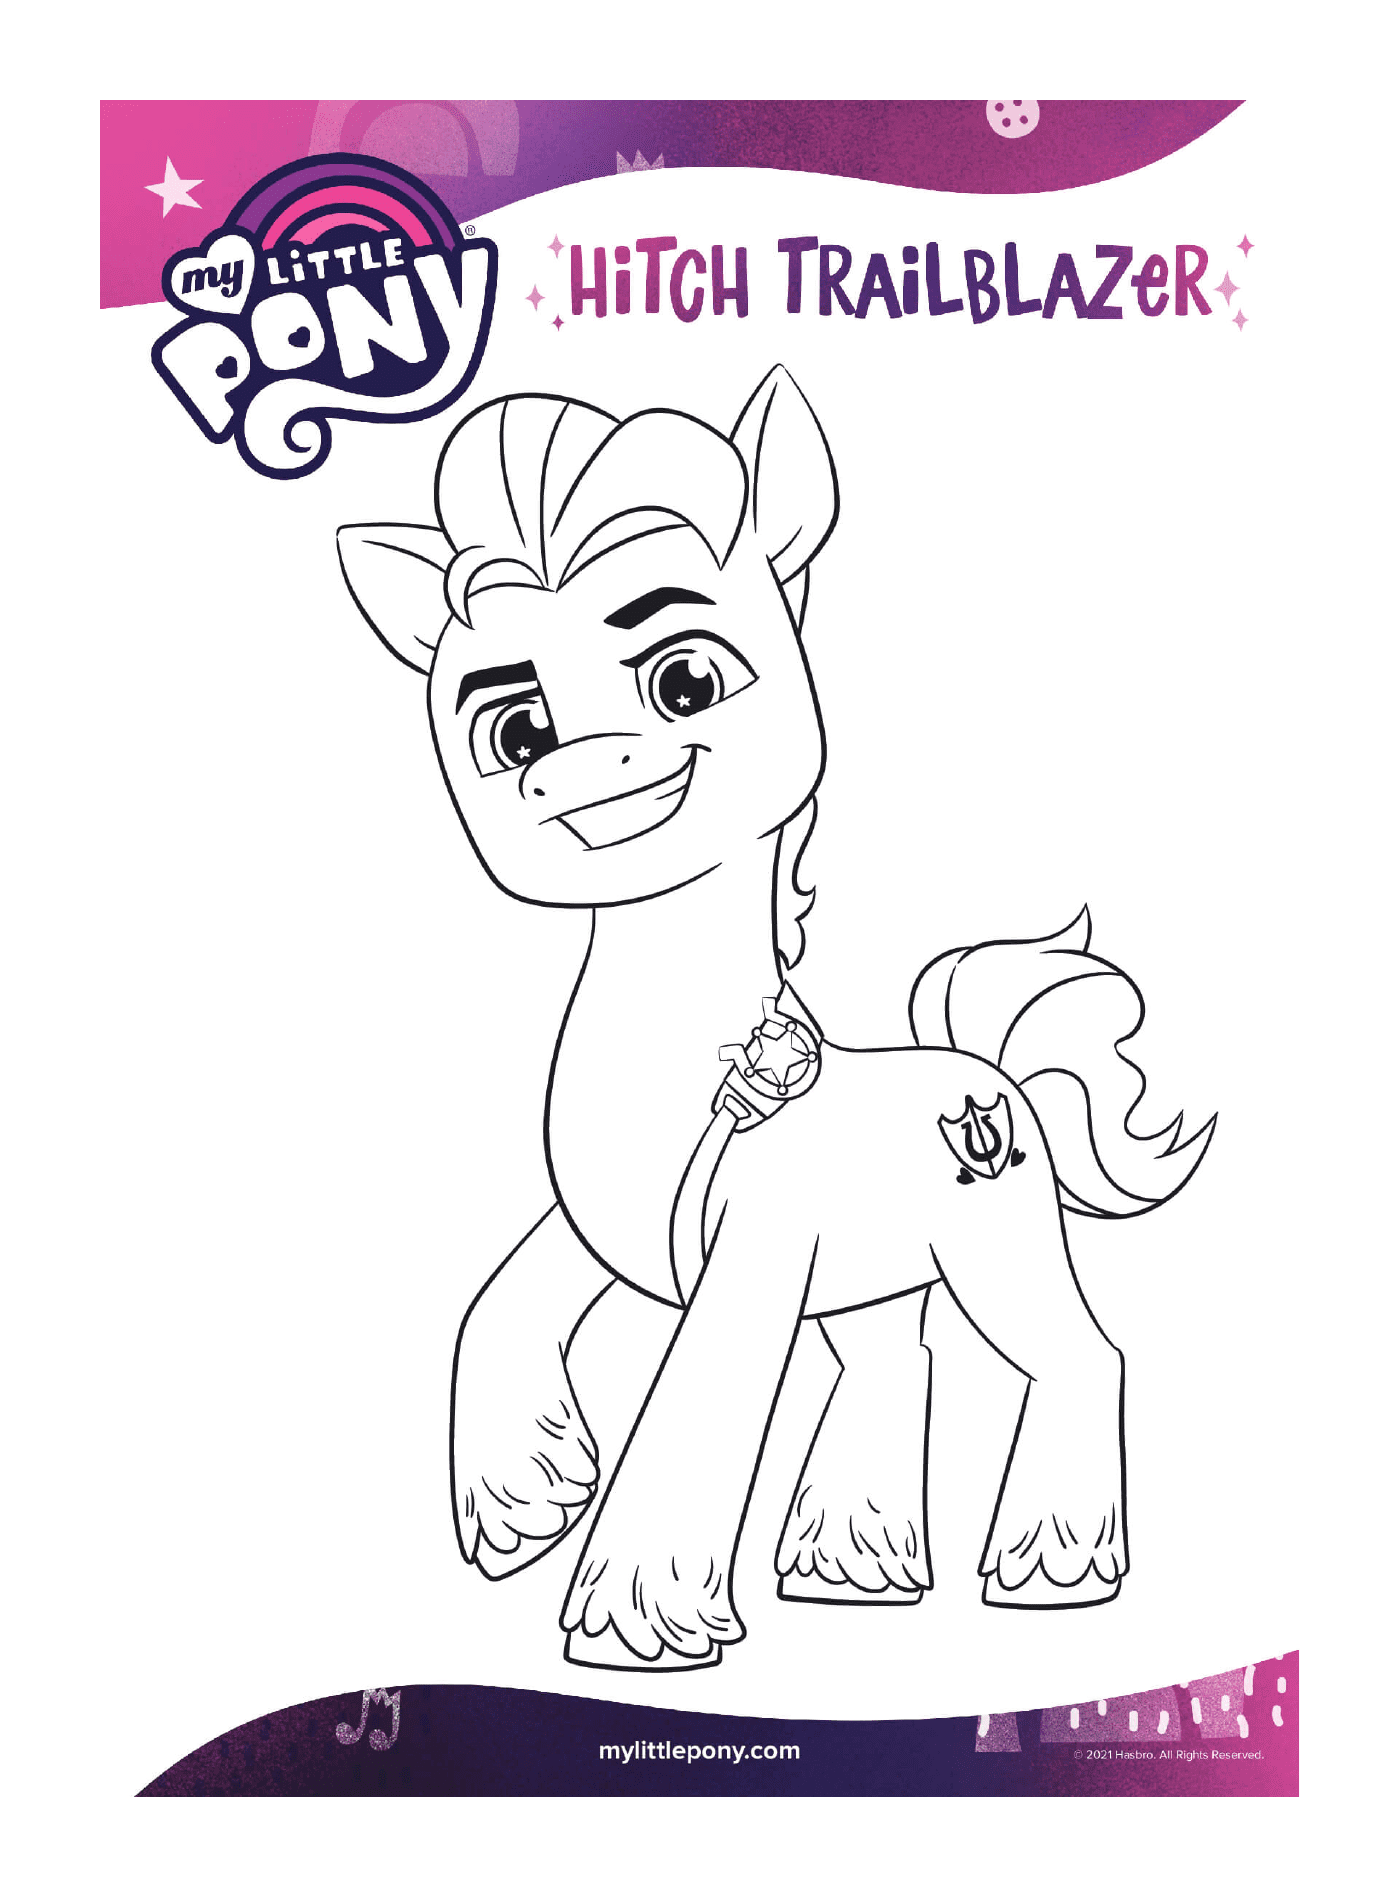  Hitch Trailblazer, new generation of pony 